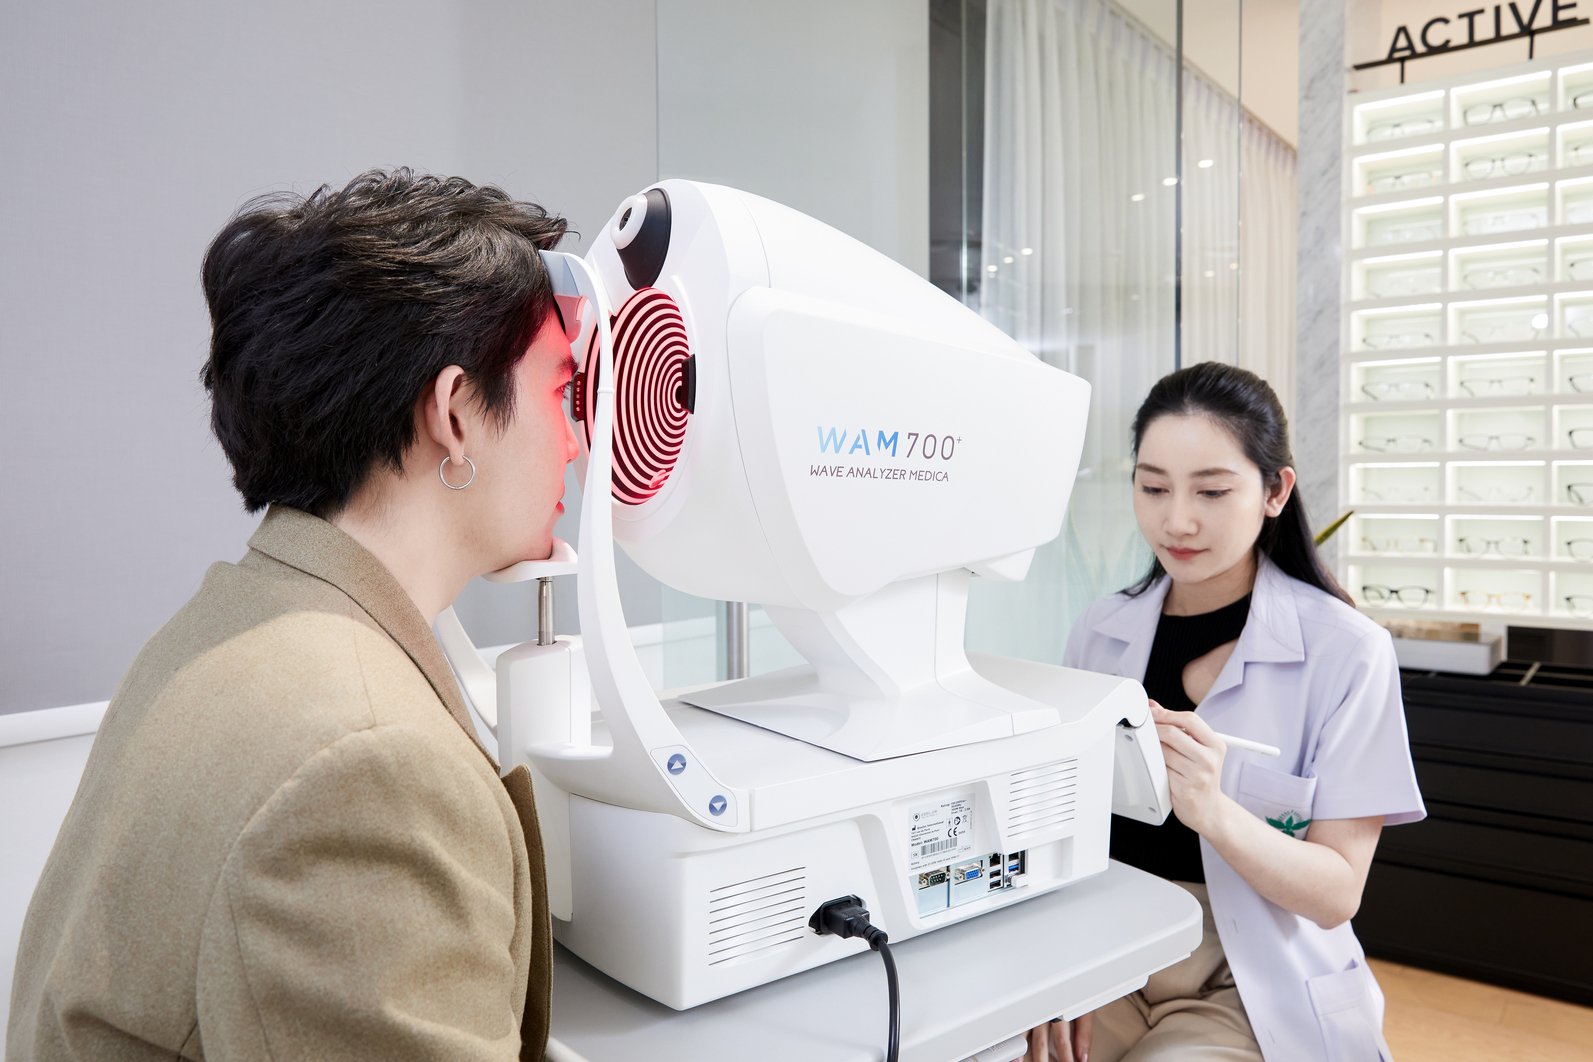 OCCURA เปิดกลยุทธ์ด้านบริการ ชู “นักทัศนมาตร” คือจุดแข็งขับเคลื่อนศูนย์บริการแว่นตายุคใหม่ ตอบโจทย์ผู้บริโภค